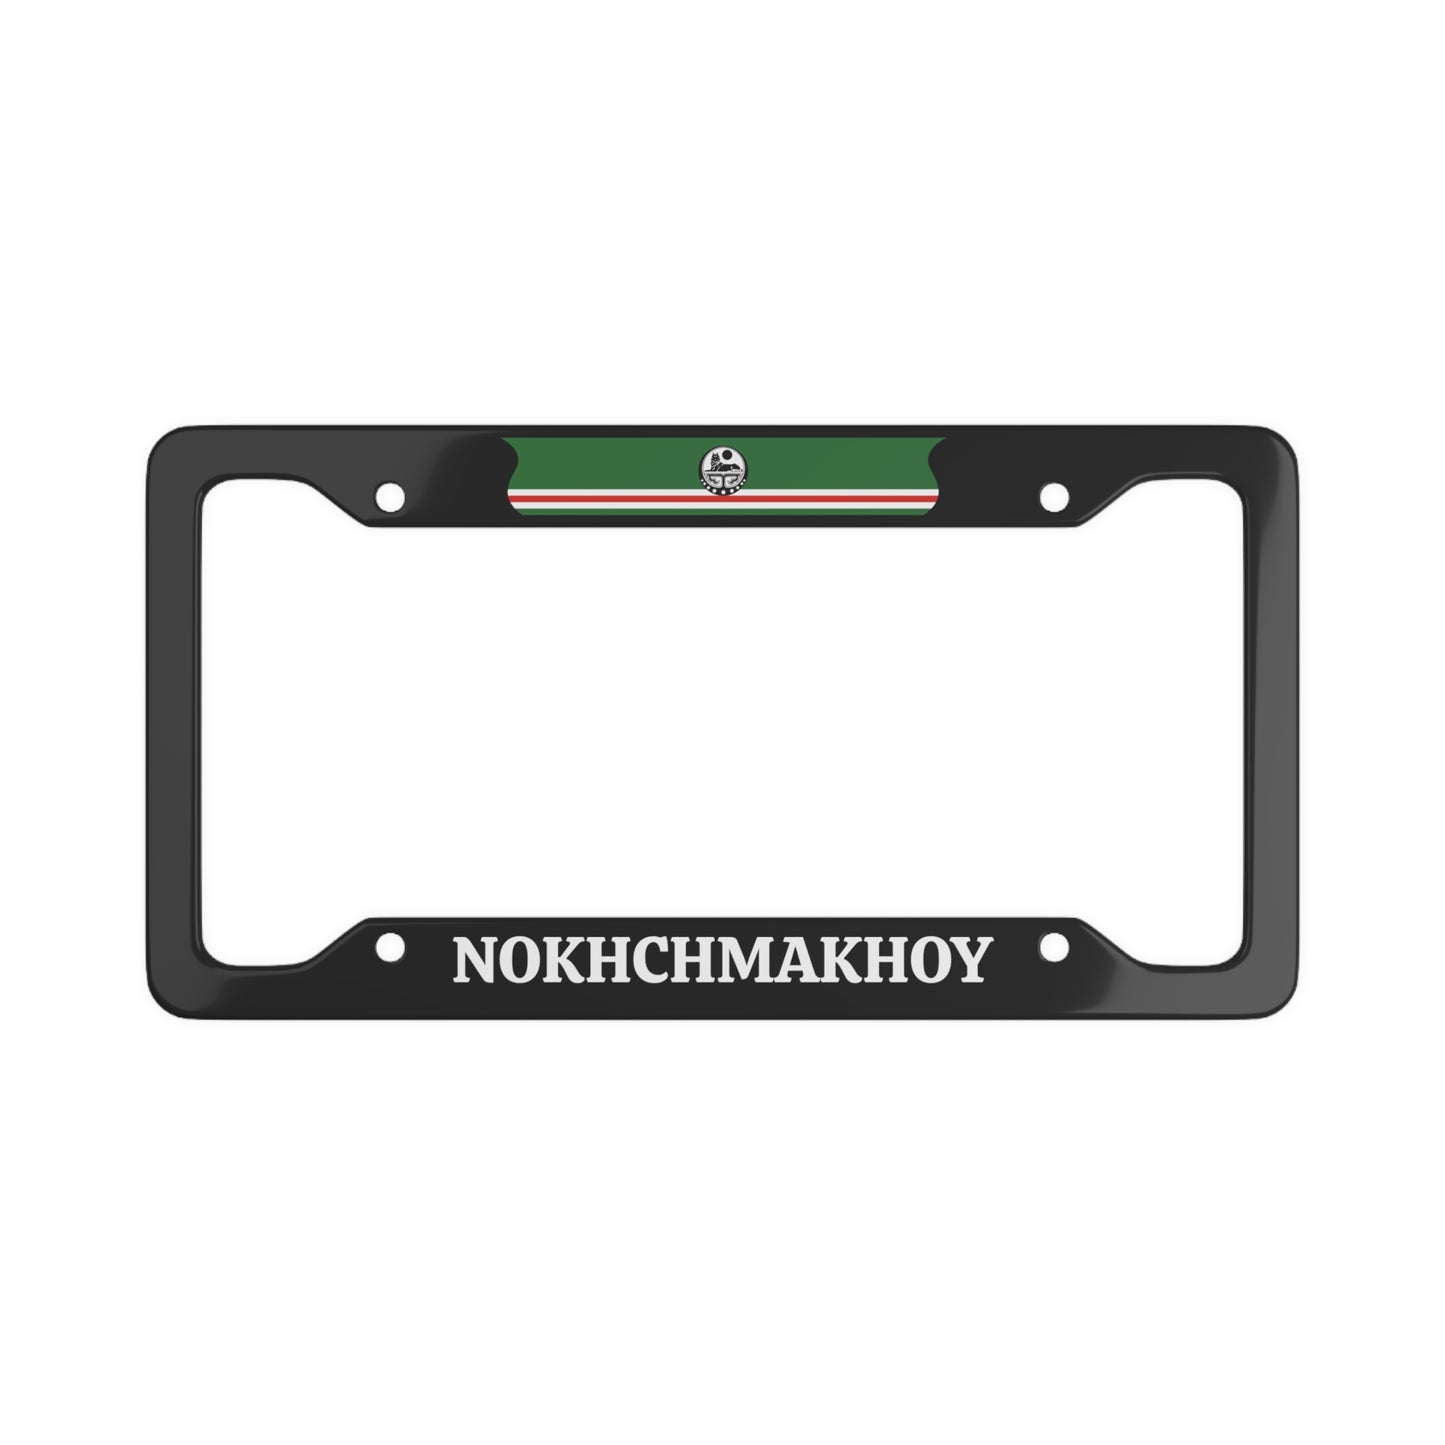 Nokhchmakhoy License Plate Frame